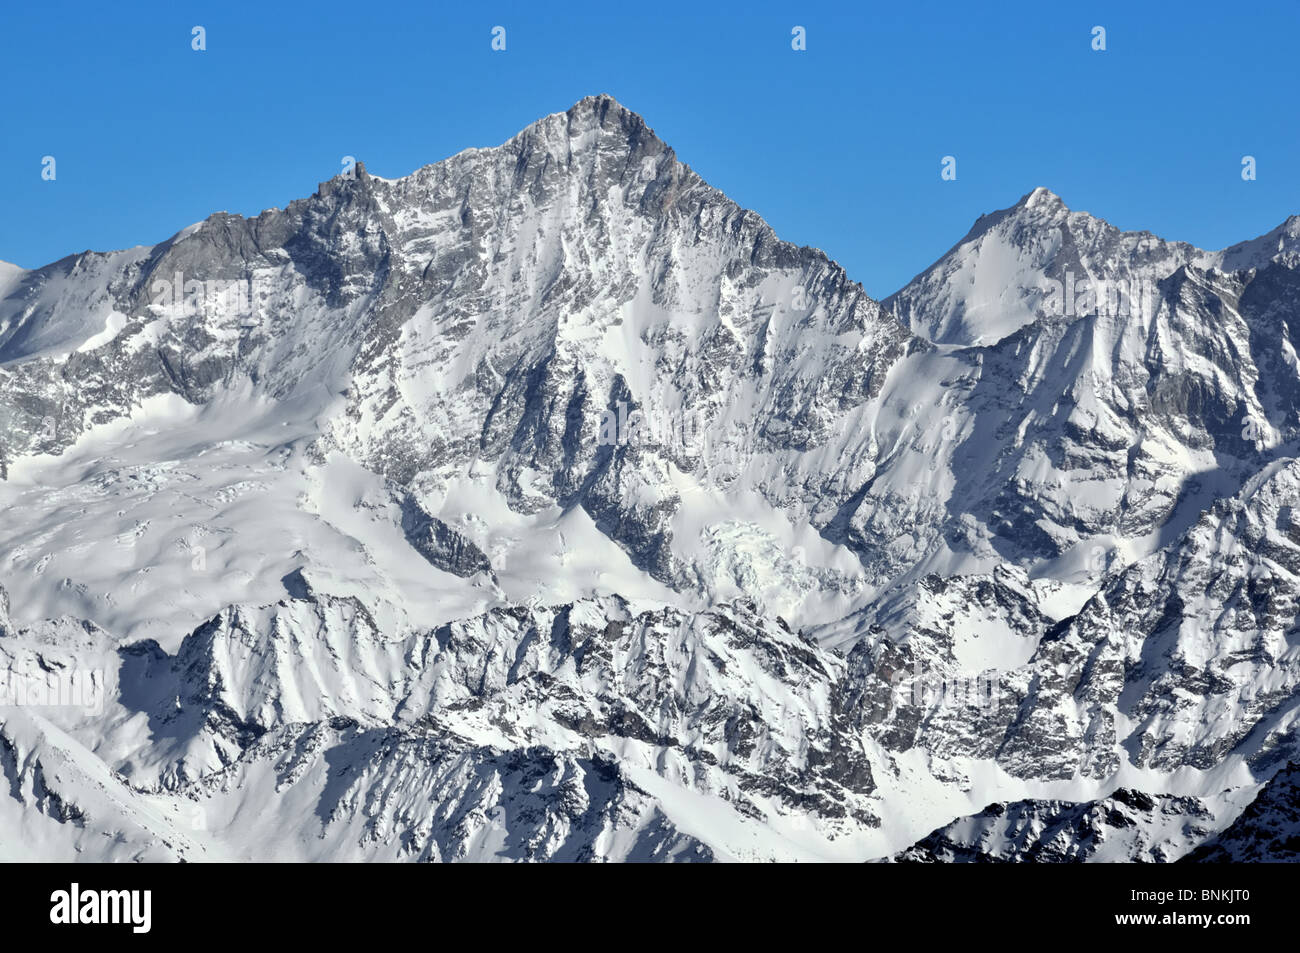 Suiza Valais suizo verticalmente precipitadamente de fresa de nieve rock cliff Alpes blanco alpino bocina montañas invernales Foto de stock